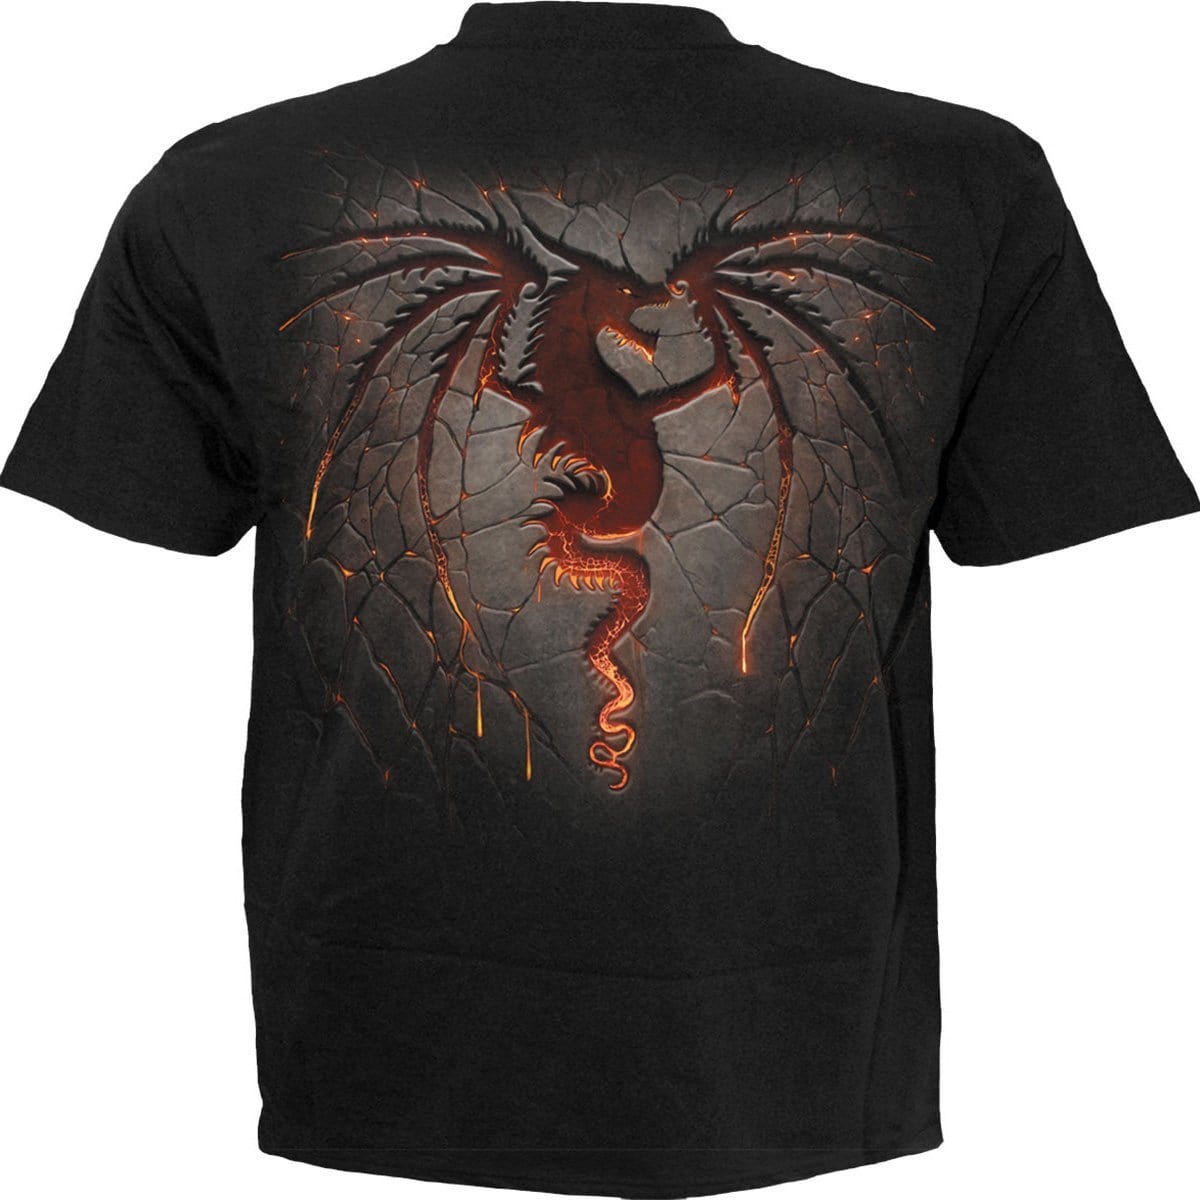 DRAGON FURNACE - T-Shirt Black - Spiral USA